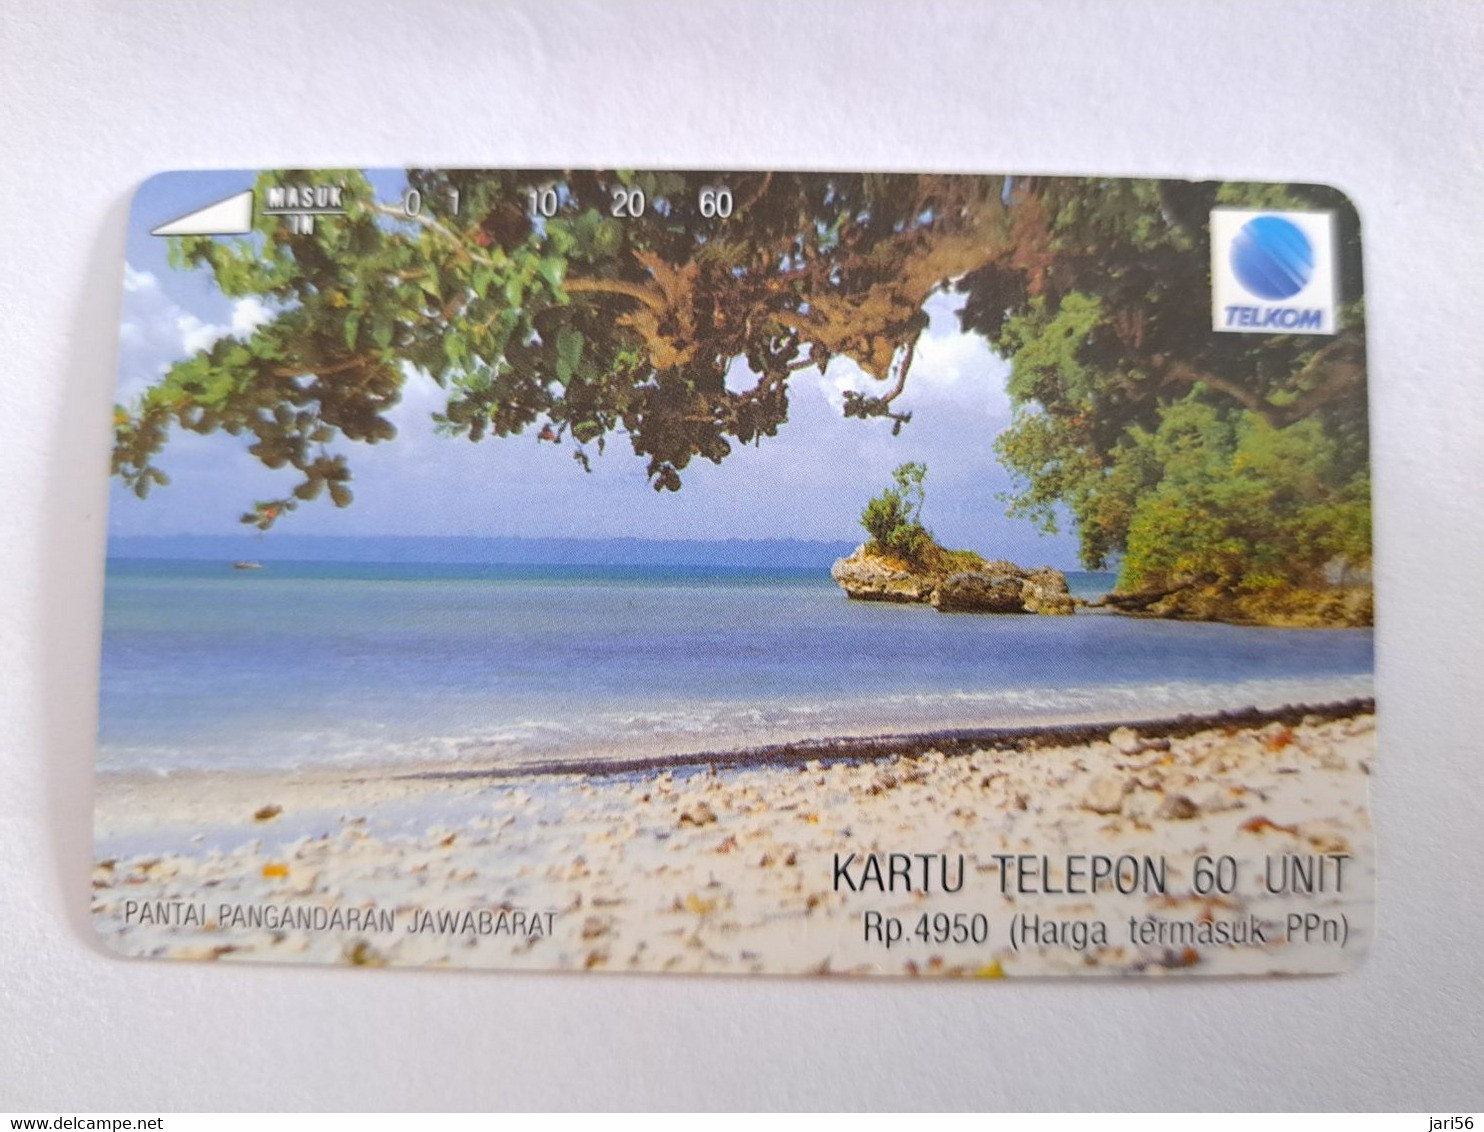 INDONESIA MAGNETIC/TAMURA  60 UNITS   PANTAL PANGANDARAN JAWABARAT / BEACH       MINT Card   **10598 ** - Indonesia